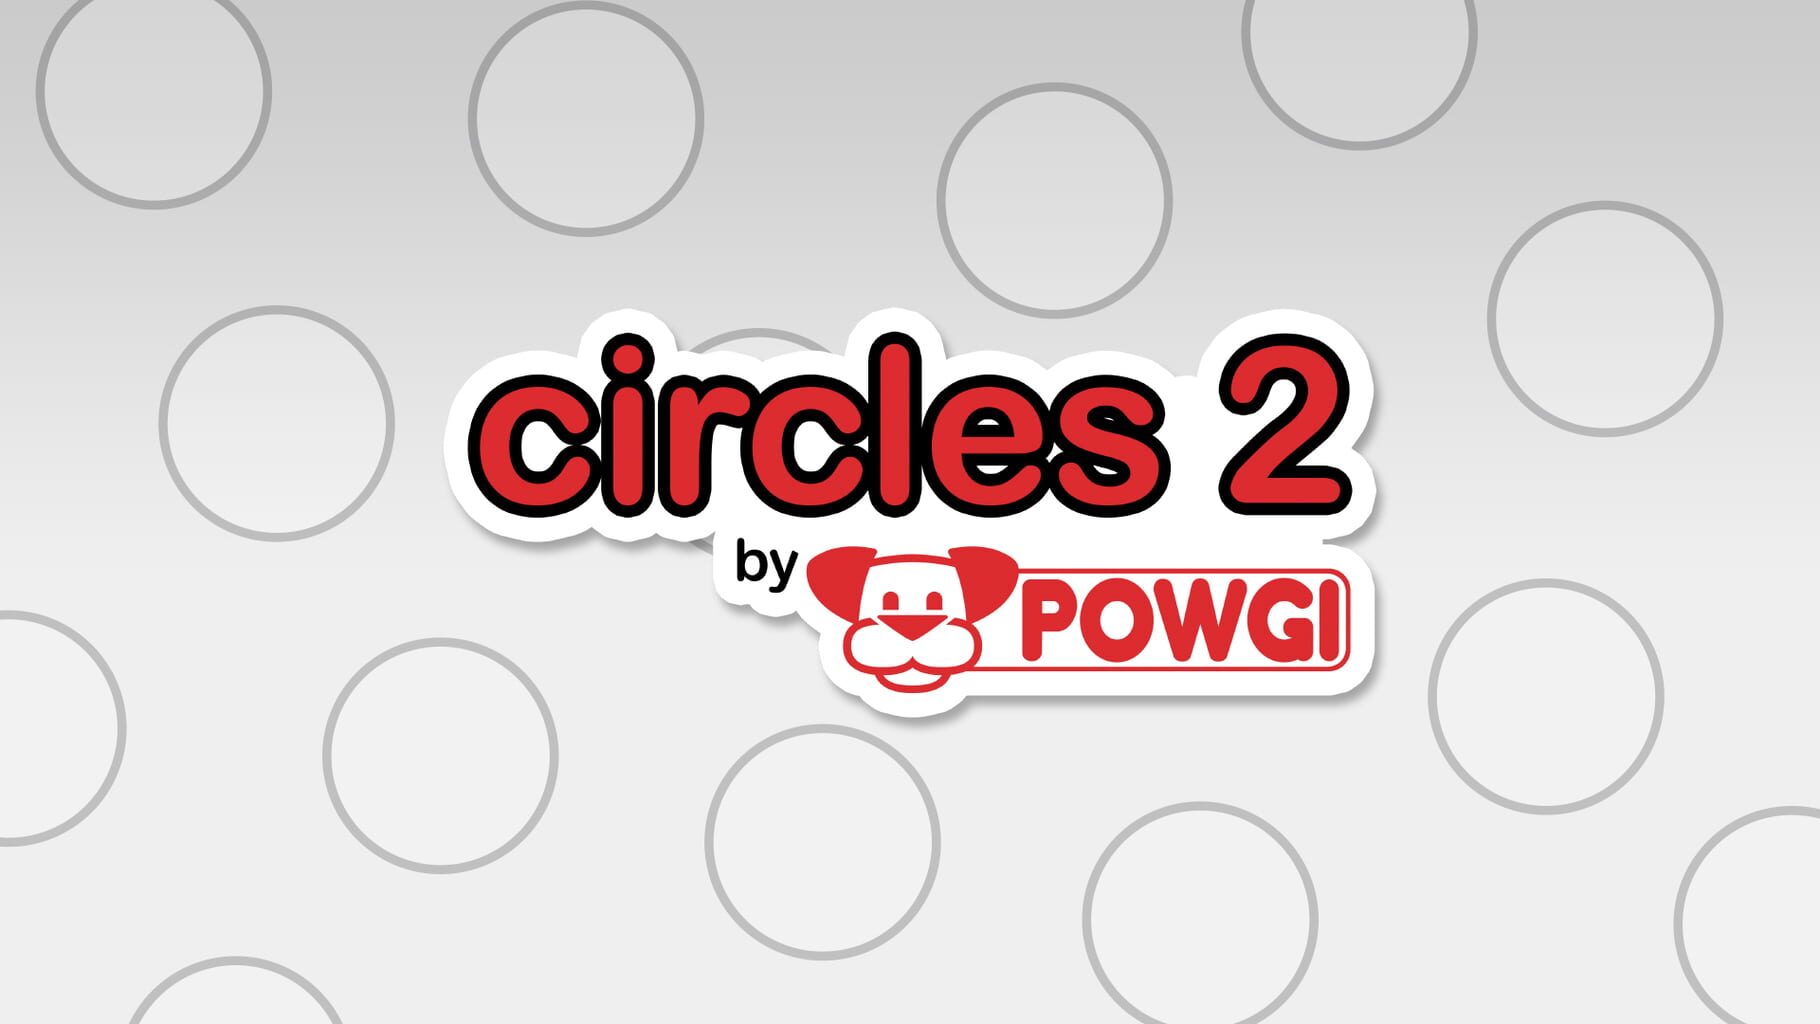 Circles 2 by Powgi artwork